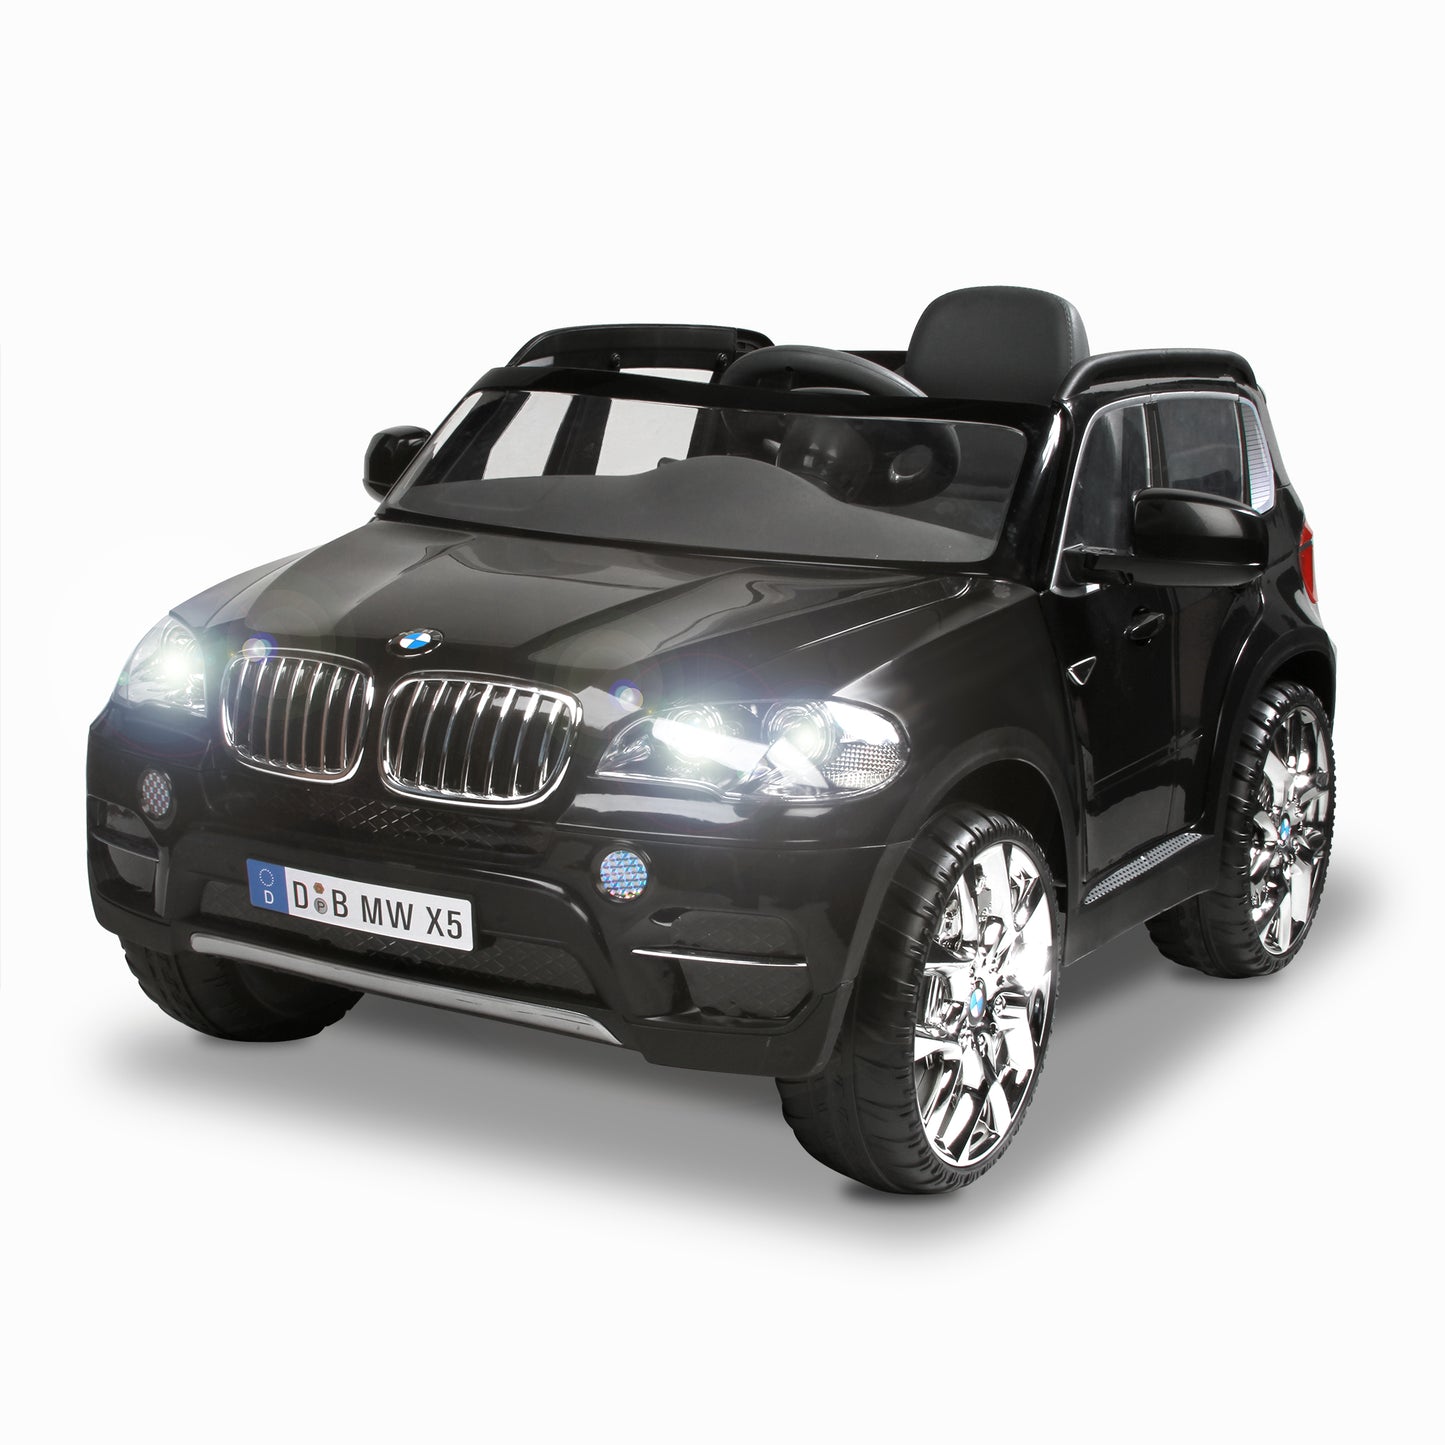 BMW X5 6-Volt Battery Ride-On Vehicle (Black)